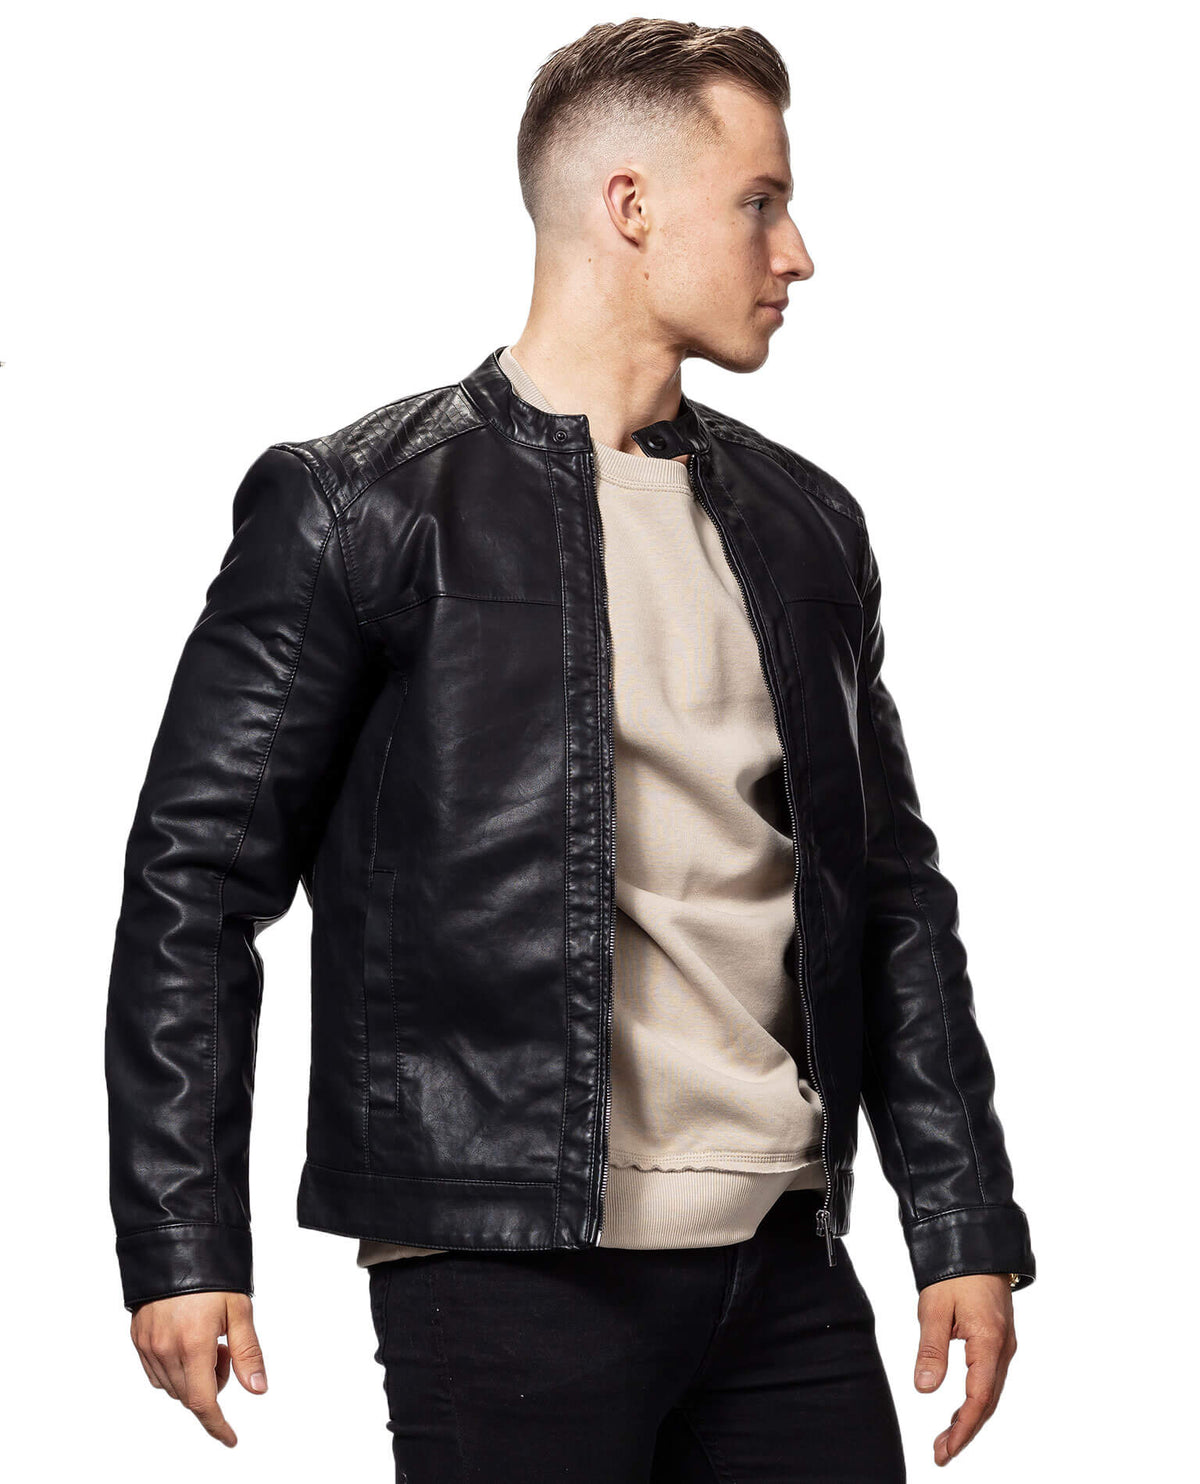 Mens New Black Genuine Leather Racer Jacket